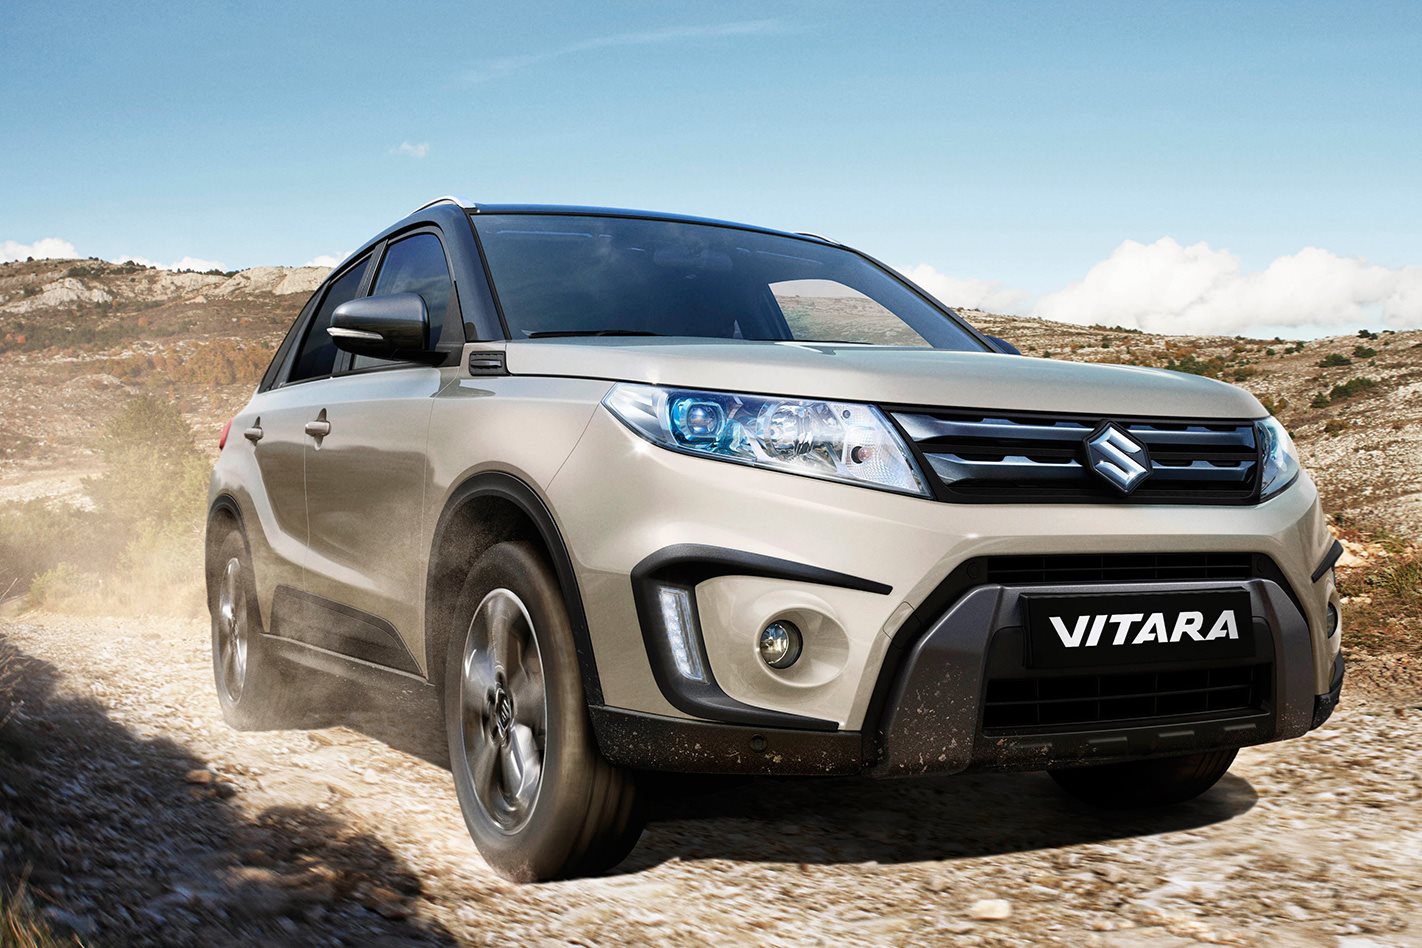 2015 Suzuki Vitara review